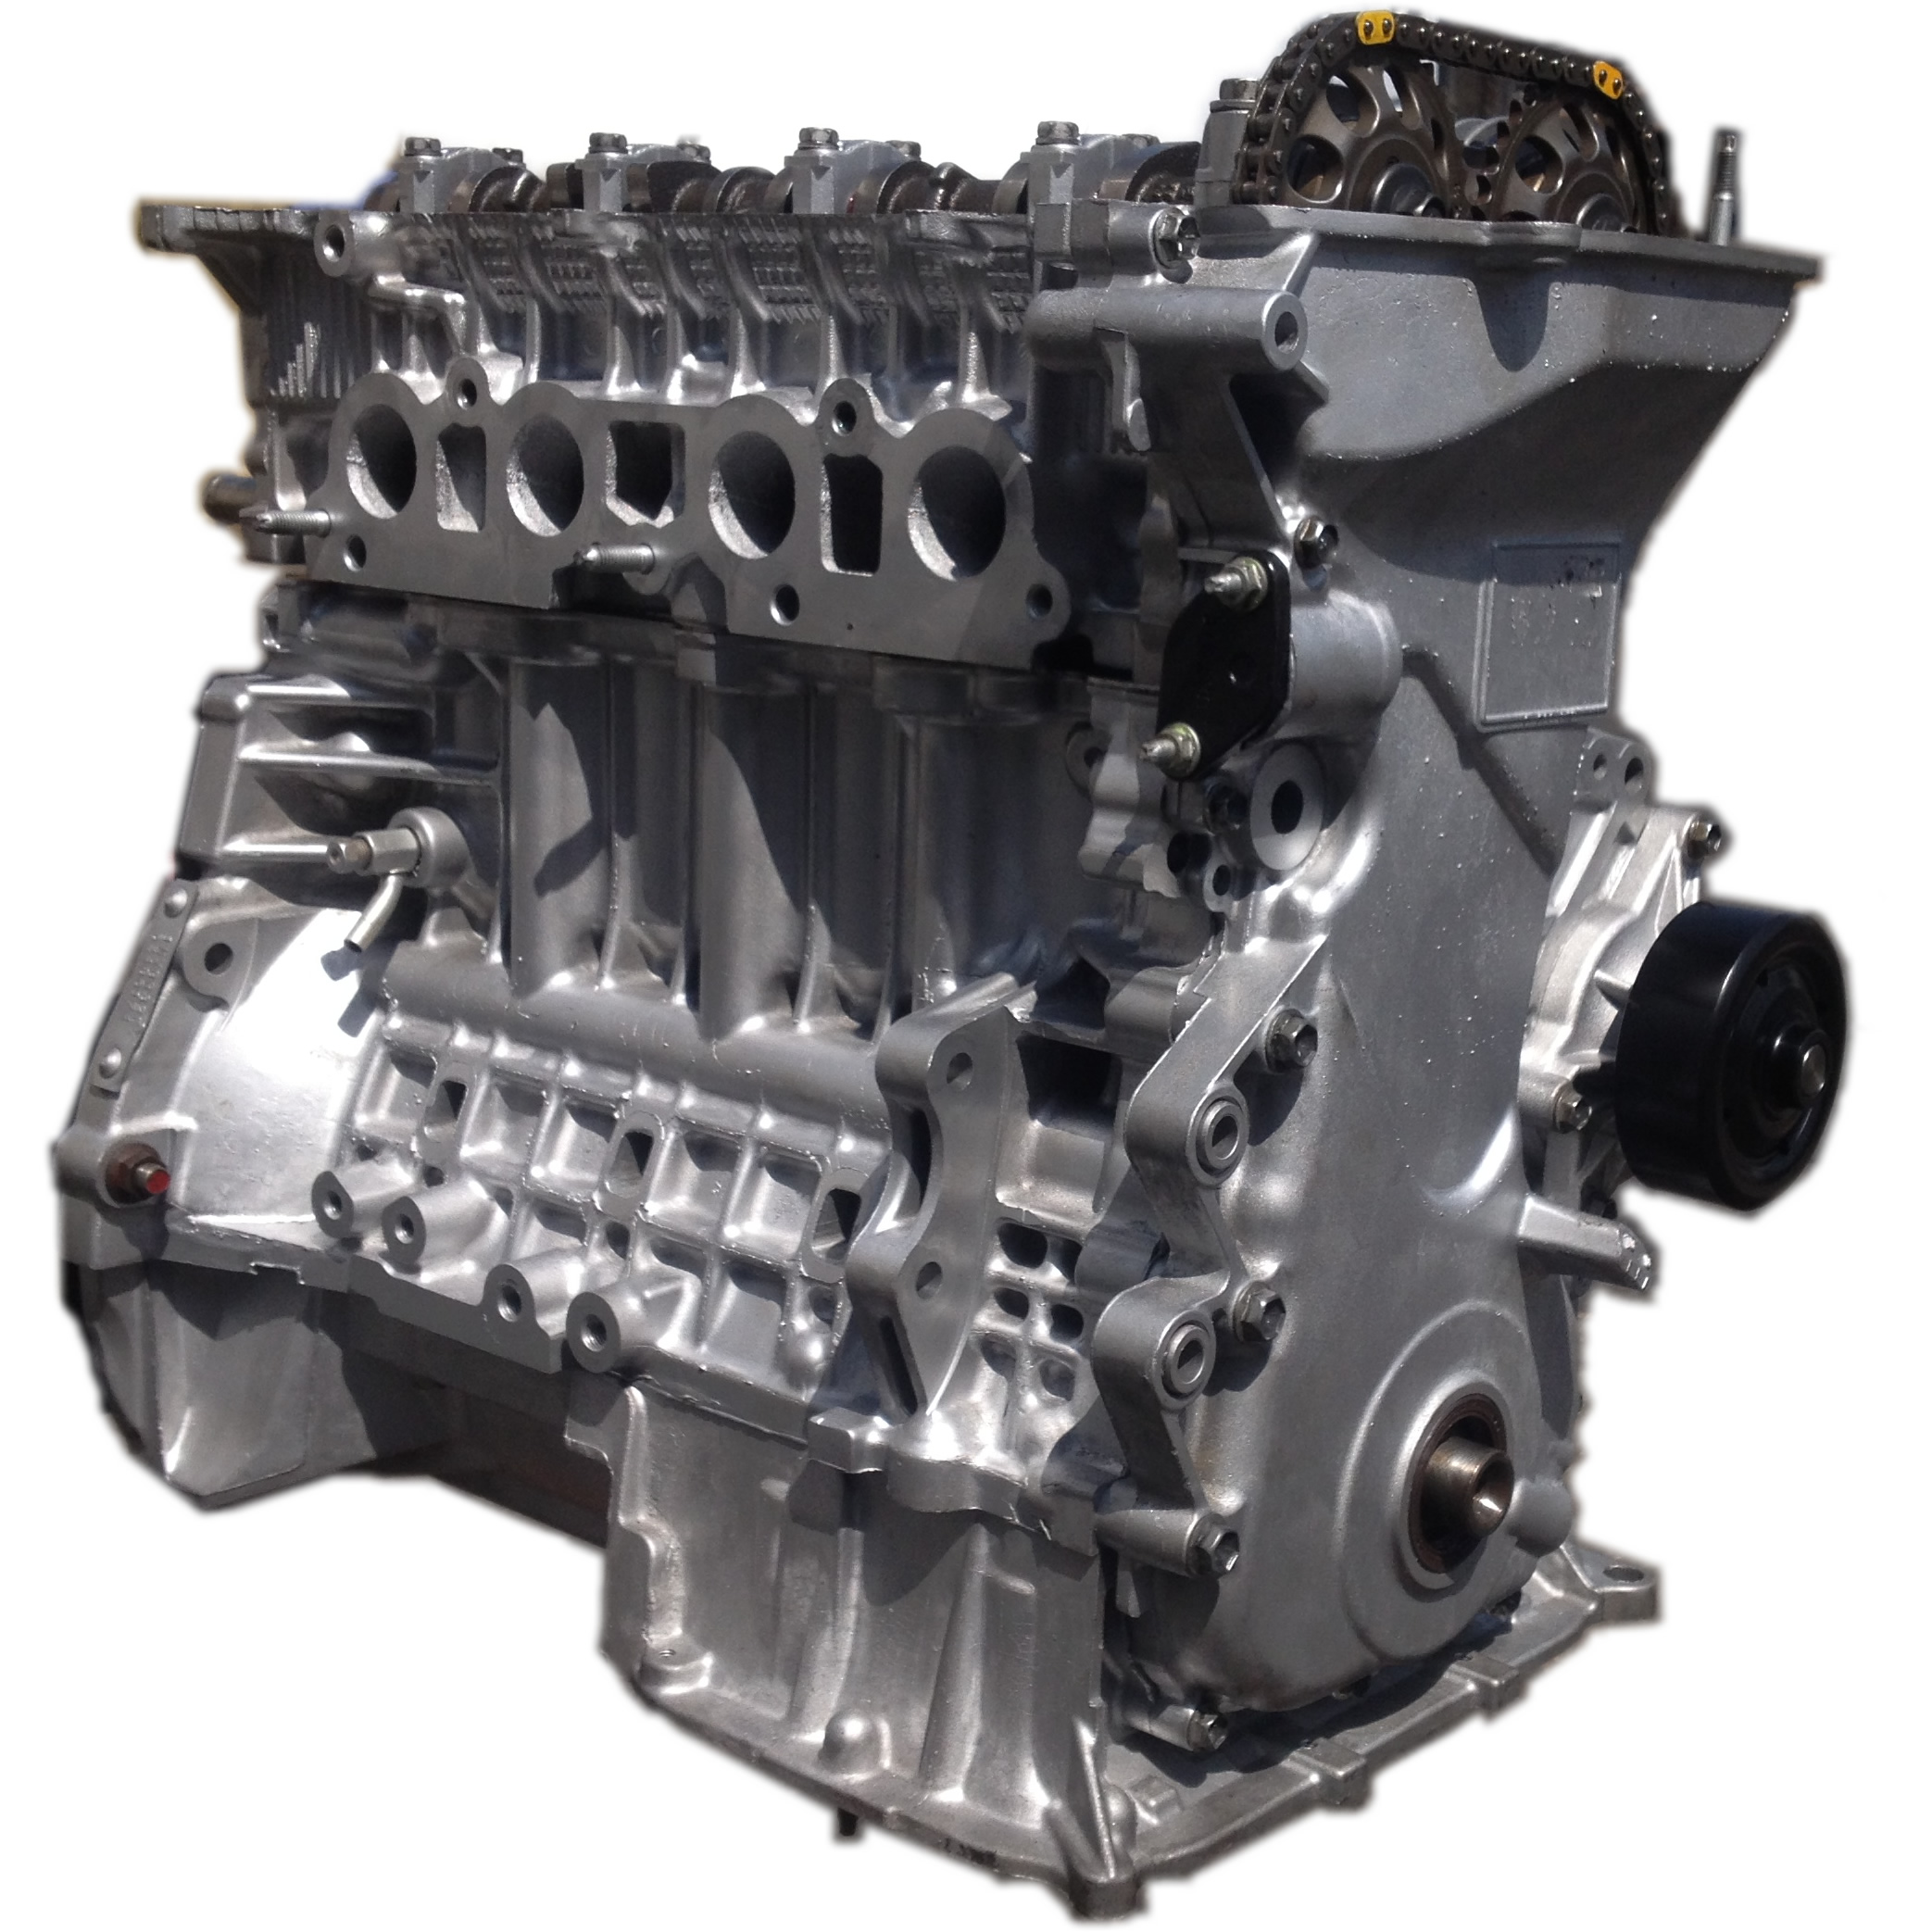 » Rebuilt 98-99 Toyota Corolla 1.8L 1ZZFE Longblock Engine